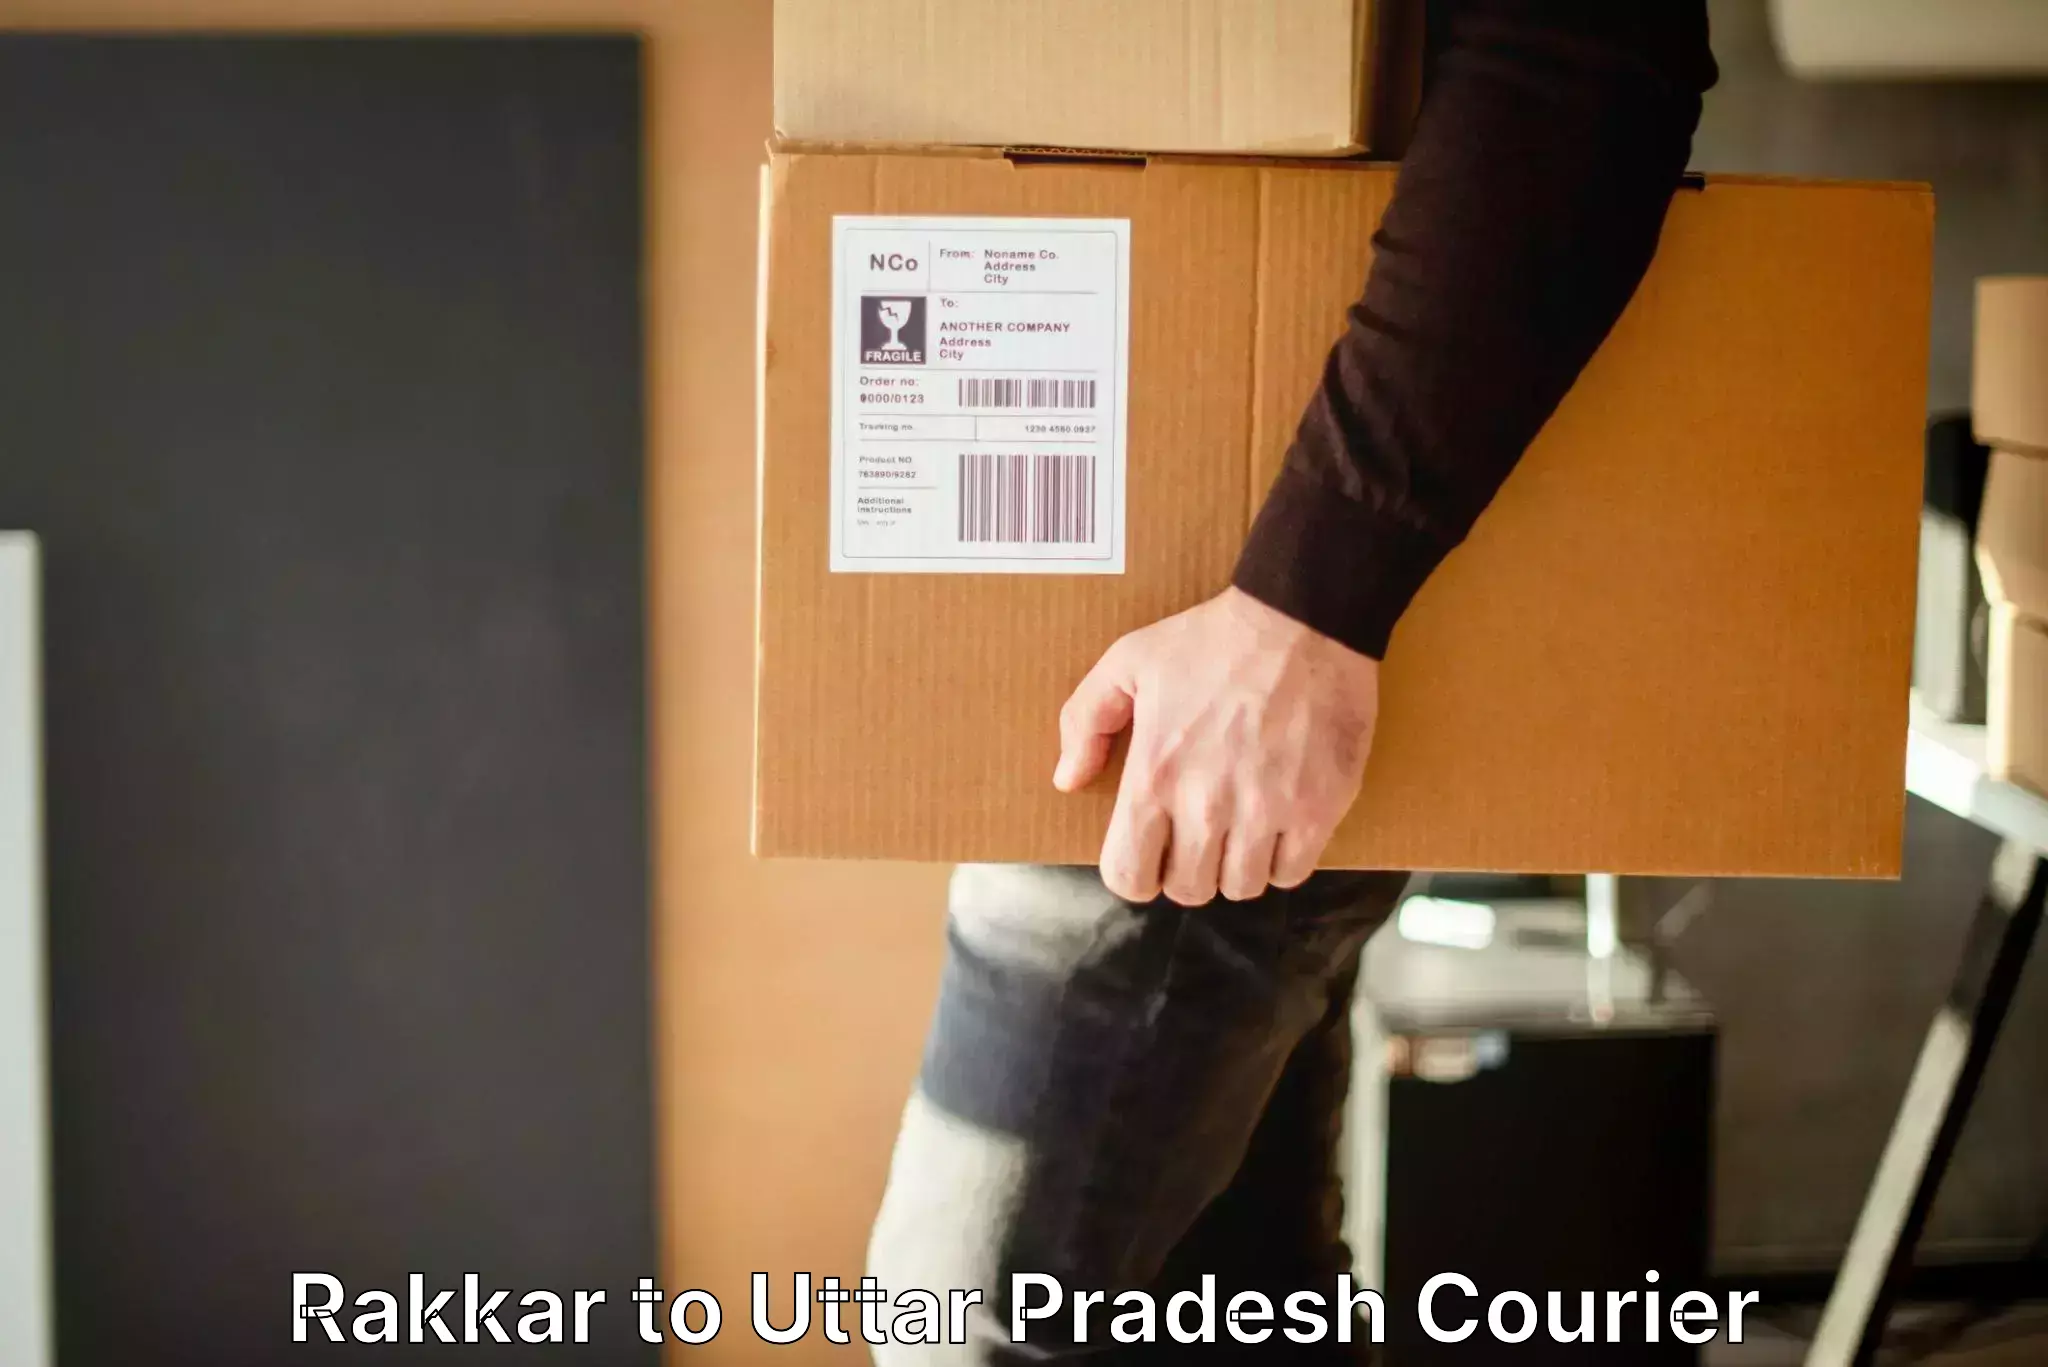 Same day luggage service Rakkar to Uttar Pradesh